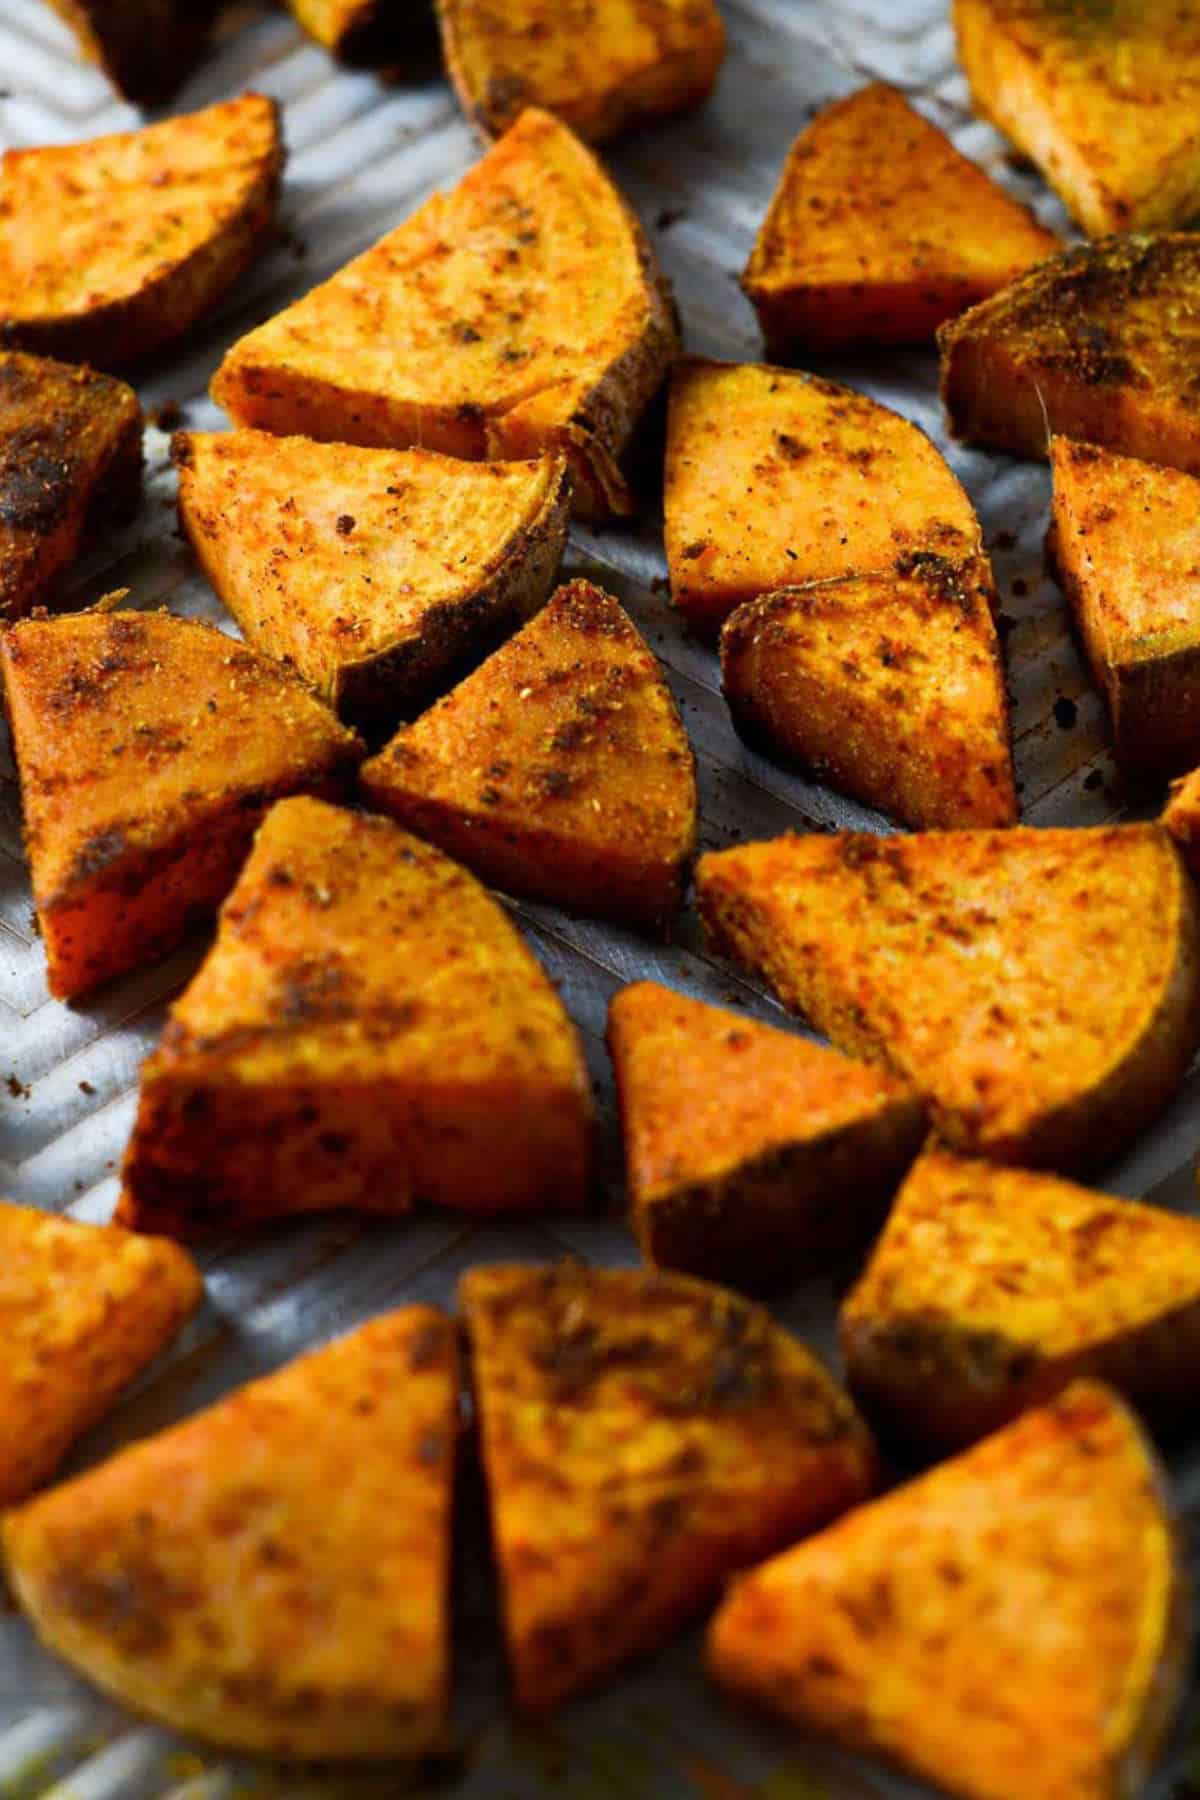 Close up image of sliced roasted sweet potatoes.